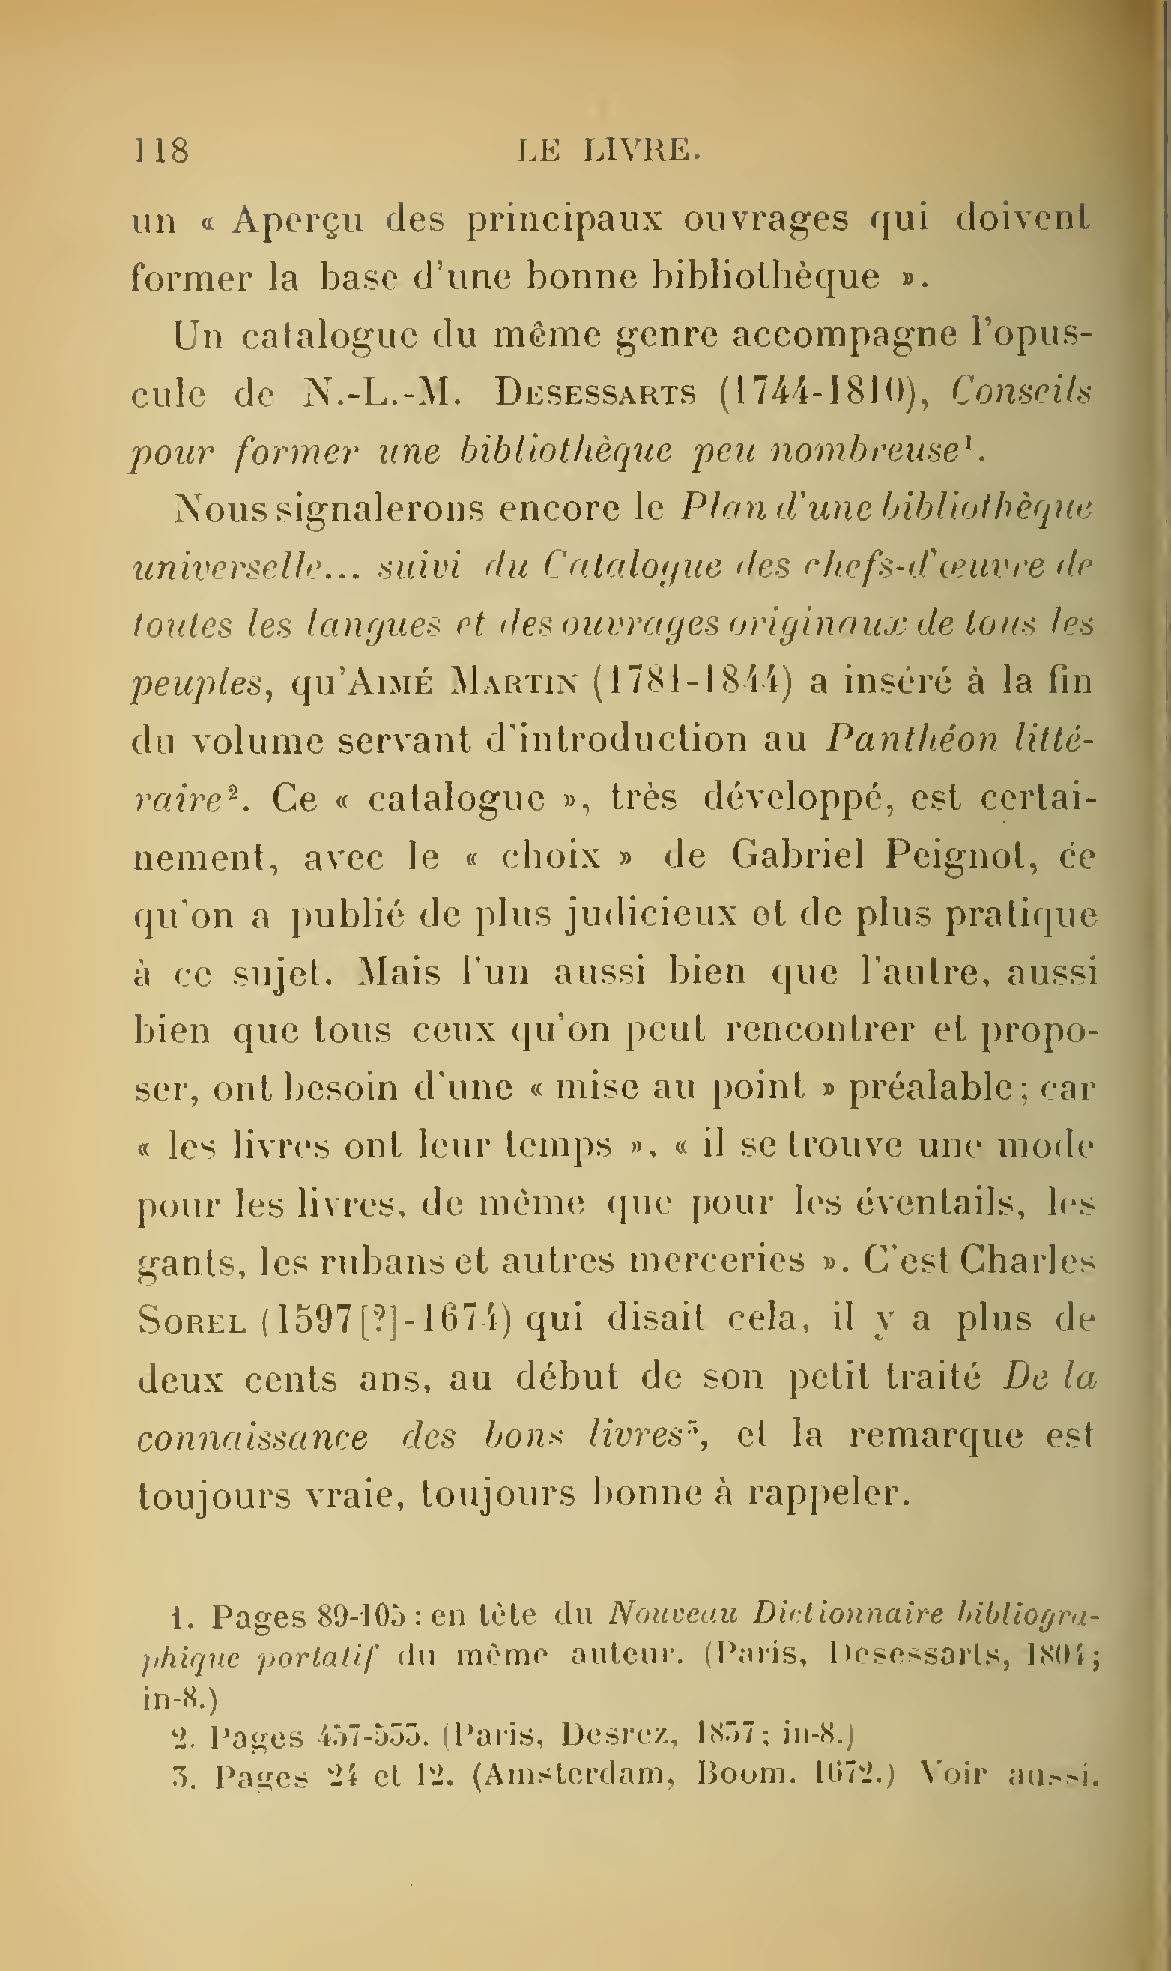 Albert Cim, Le Livre, t. II, p. 118.